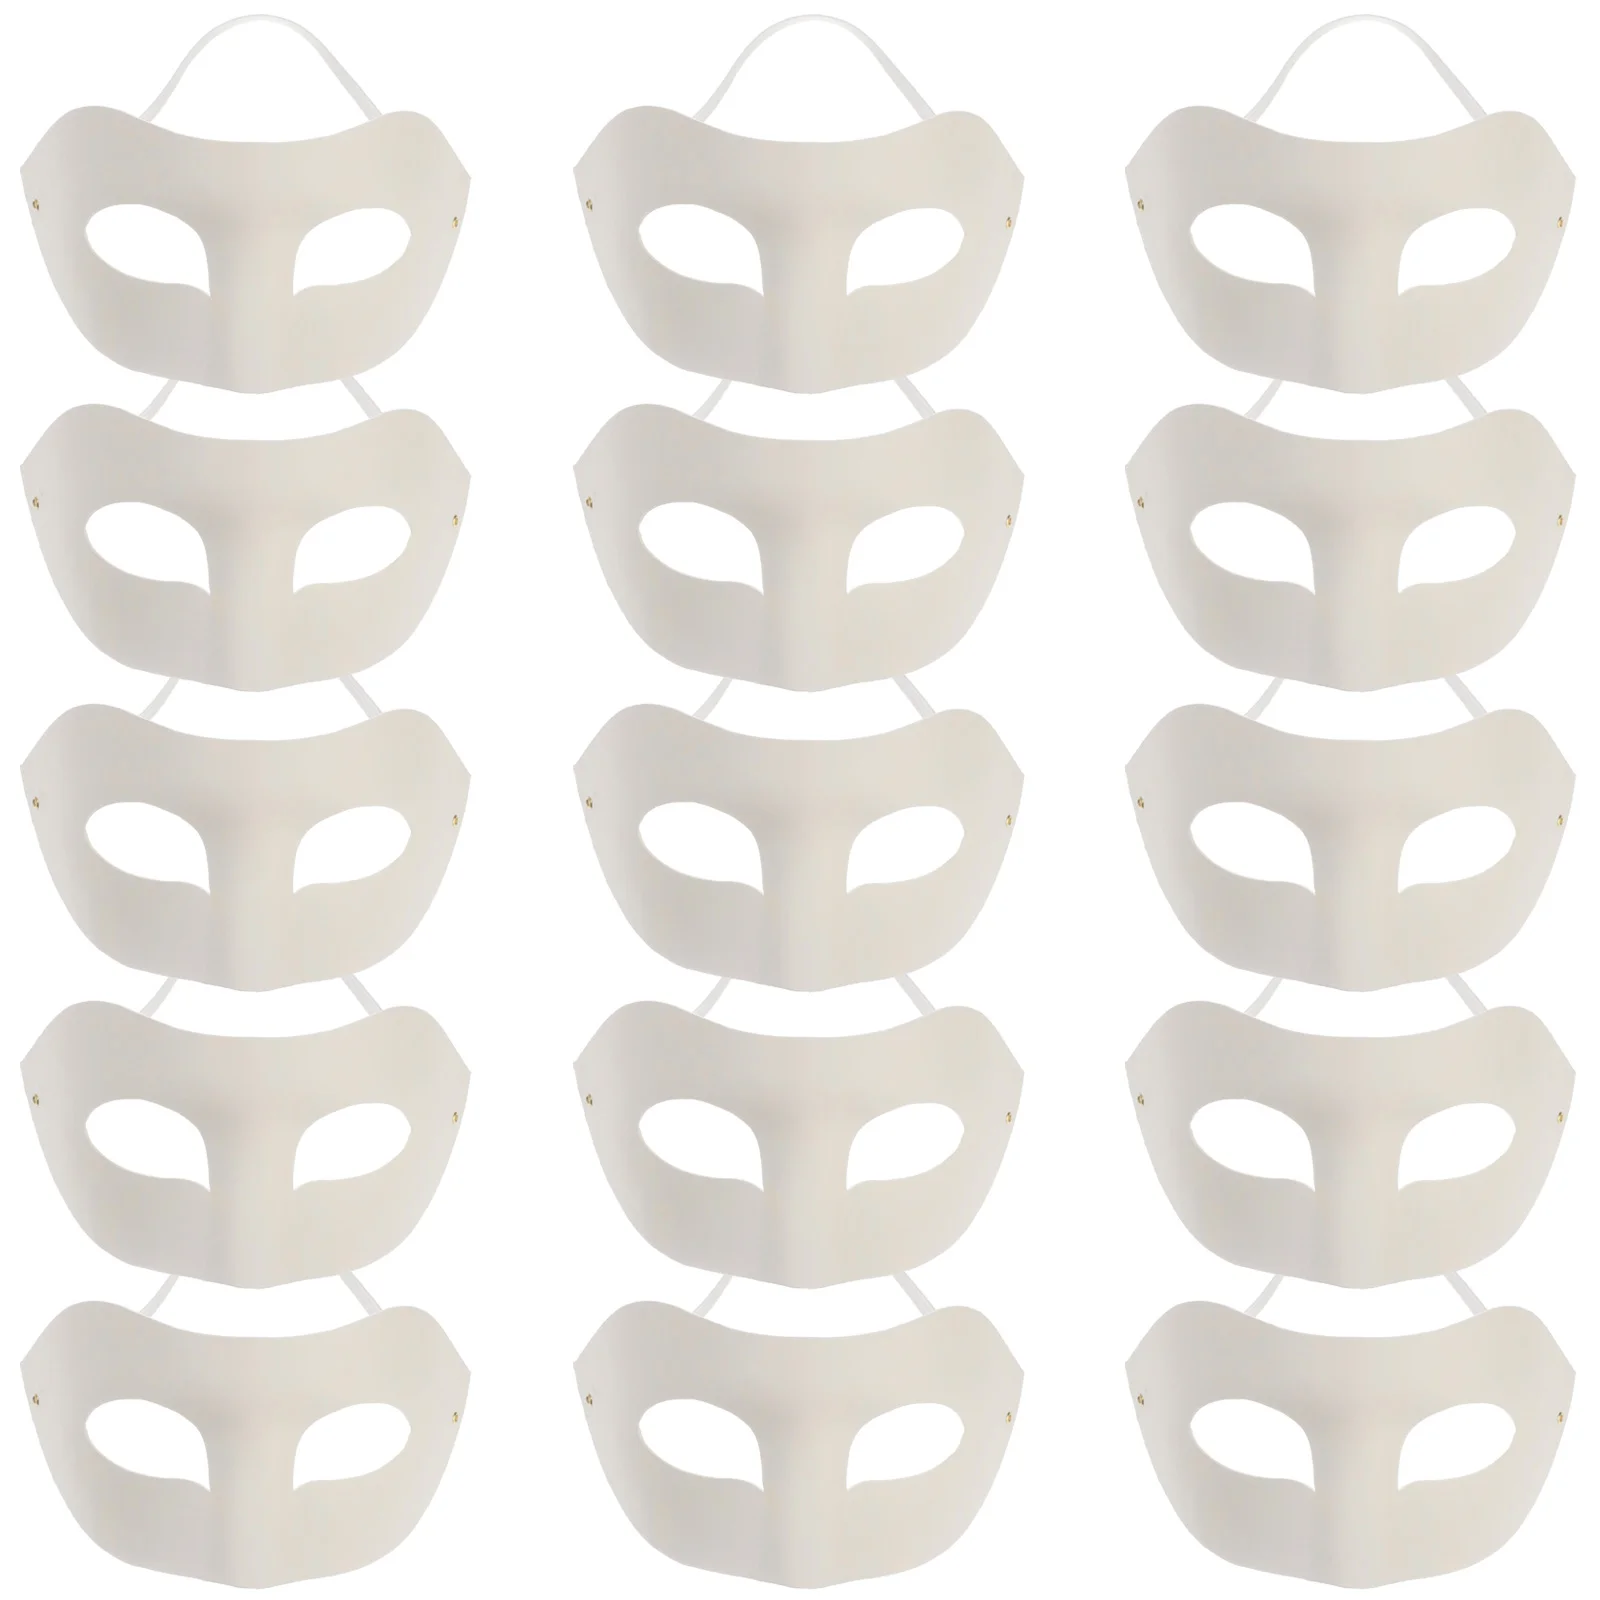 

15 Pcs DIY Pulp Mask Halloween Craft Blanks Mascarade Women Fox White Face Masquerade Party Child Animal Masks Kids